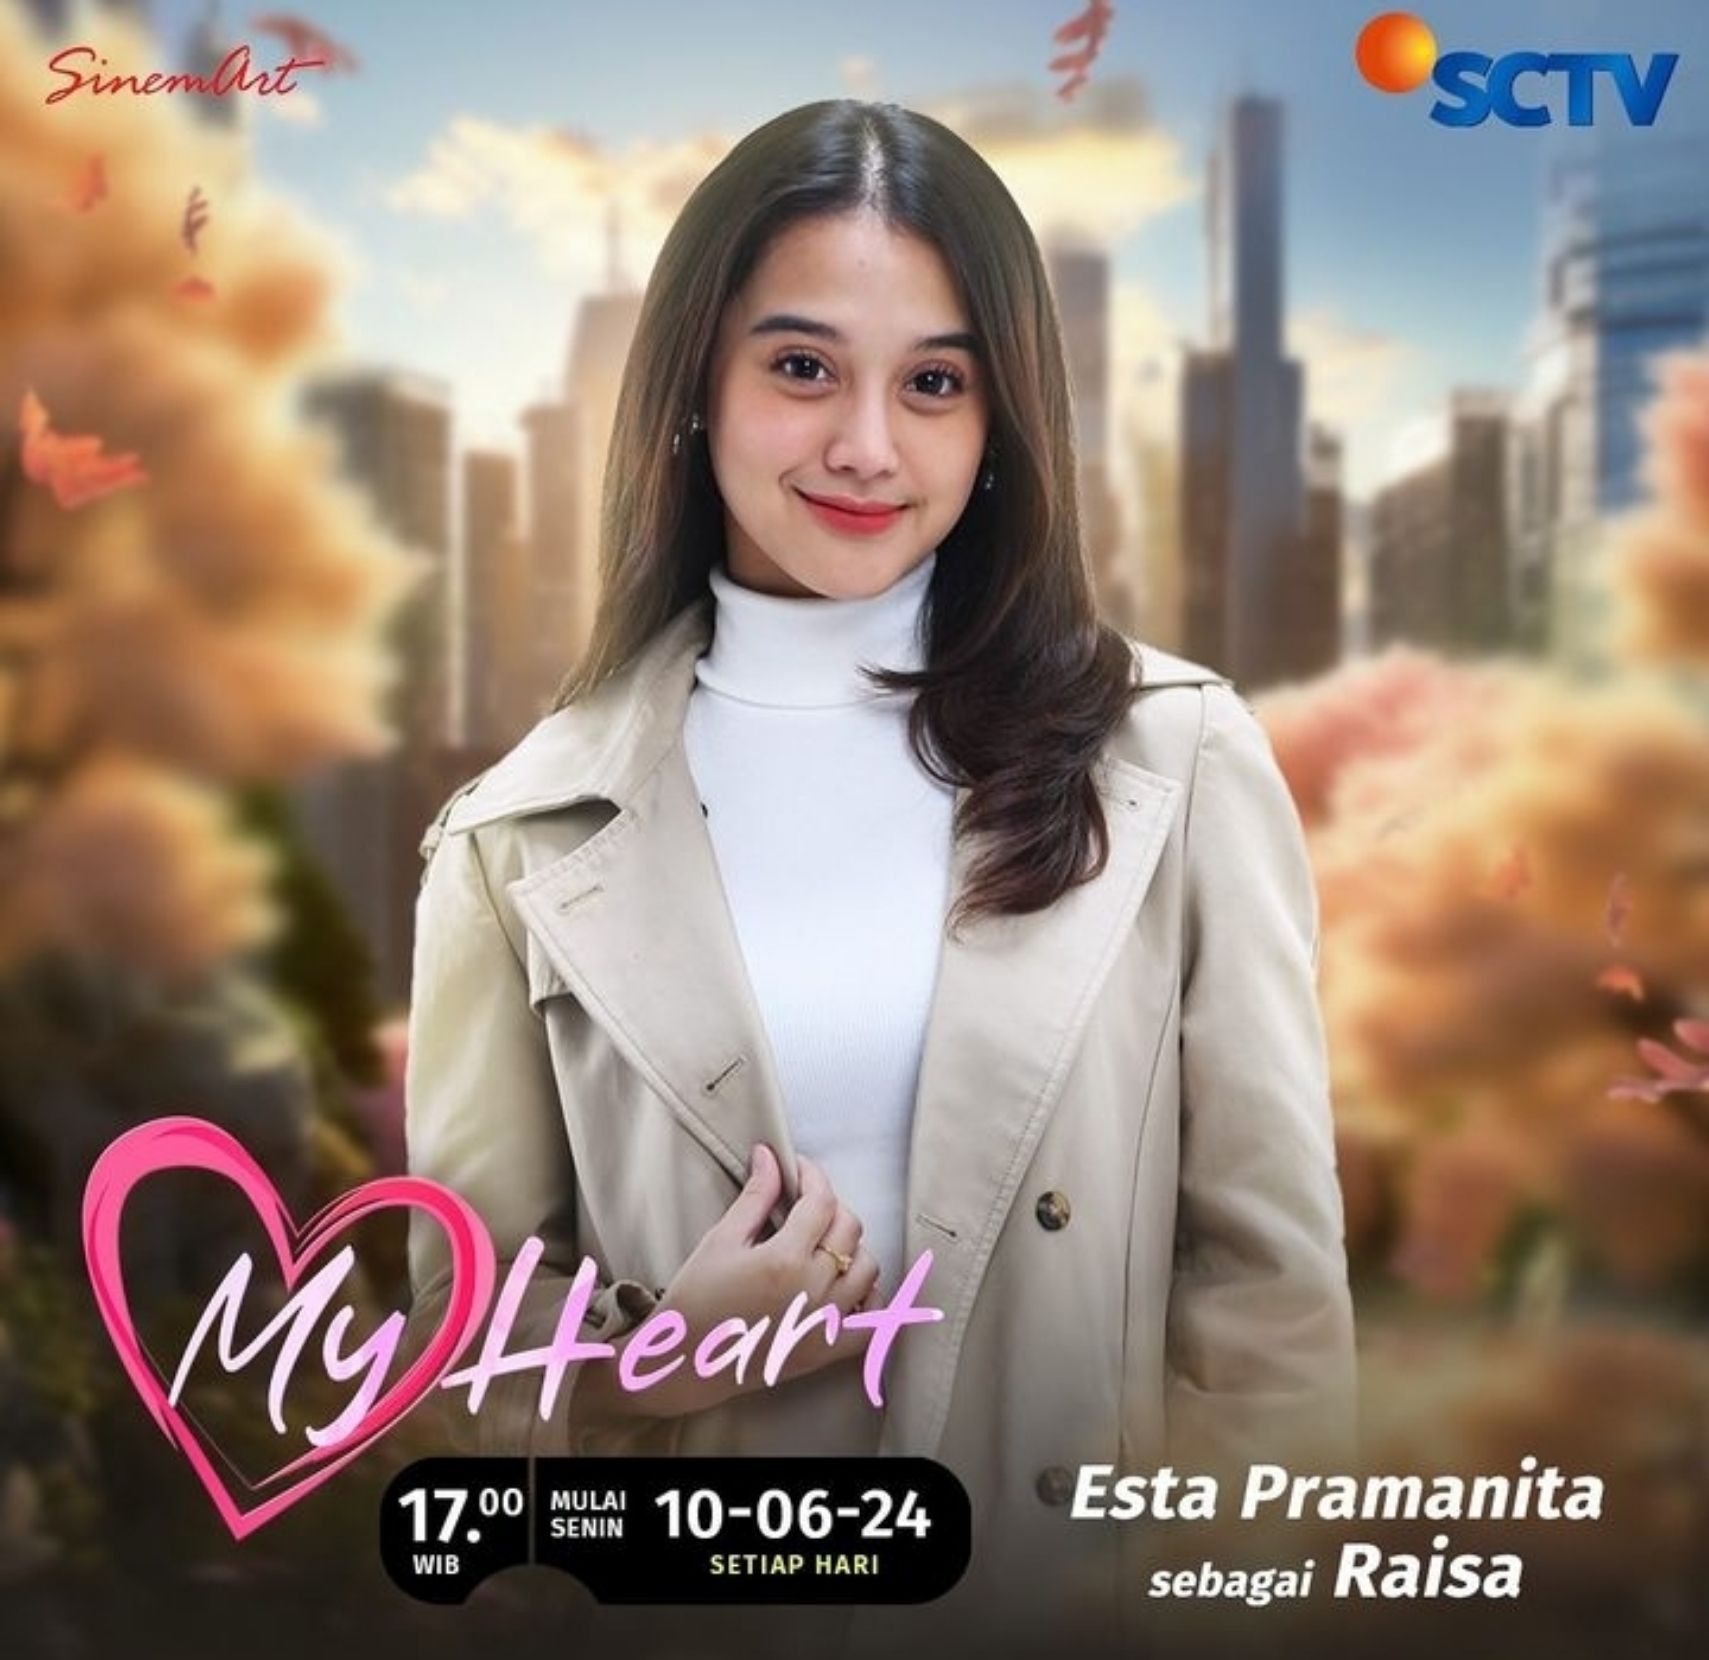 Esta Pramanita sebagai Raisa di Sinetron My Heart SCTV 